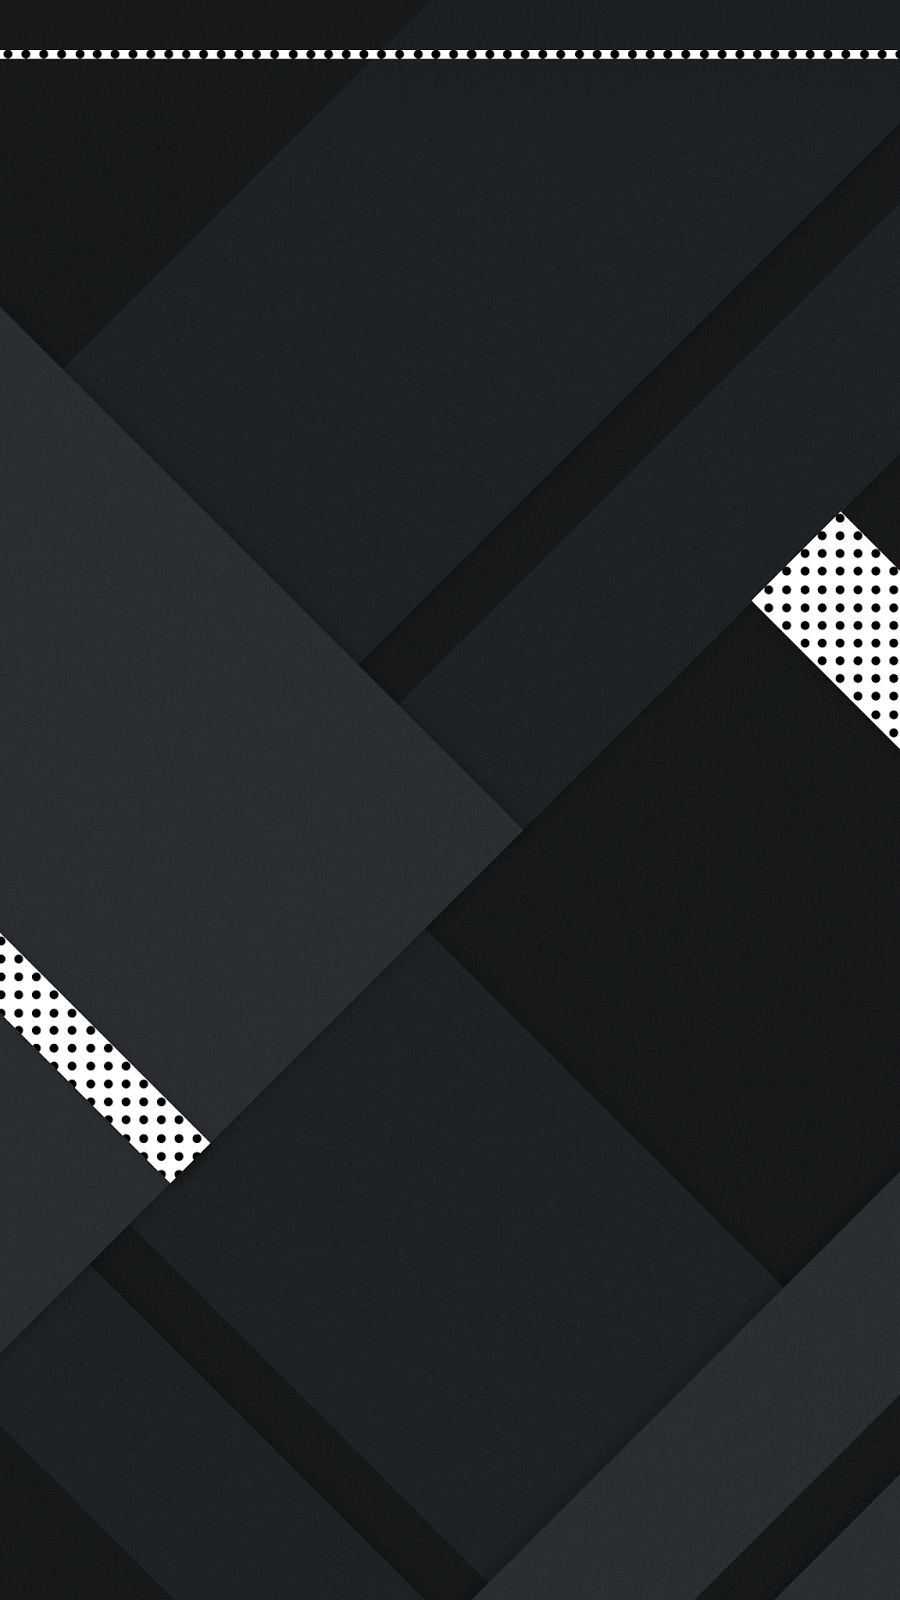 Share more than 60 dark abstract minimalist phone wallpaper super hot   incdgdbentre